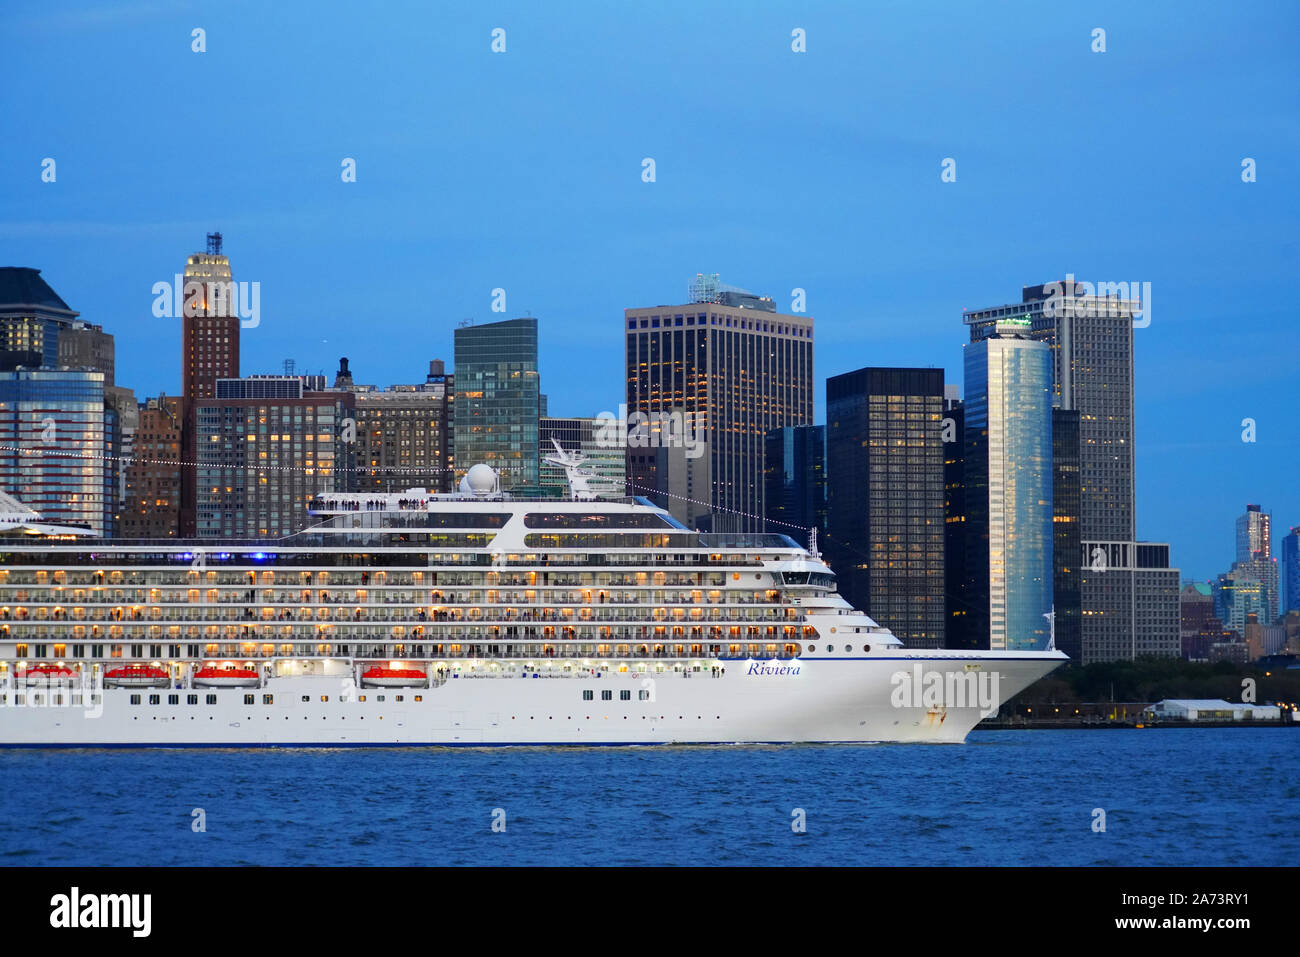 Oceania Cruises' Riviera cruise ship passing lower Manhattan skyline in New York Harbor at dusk. Stock Photo